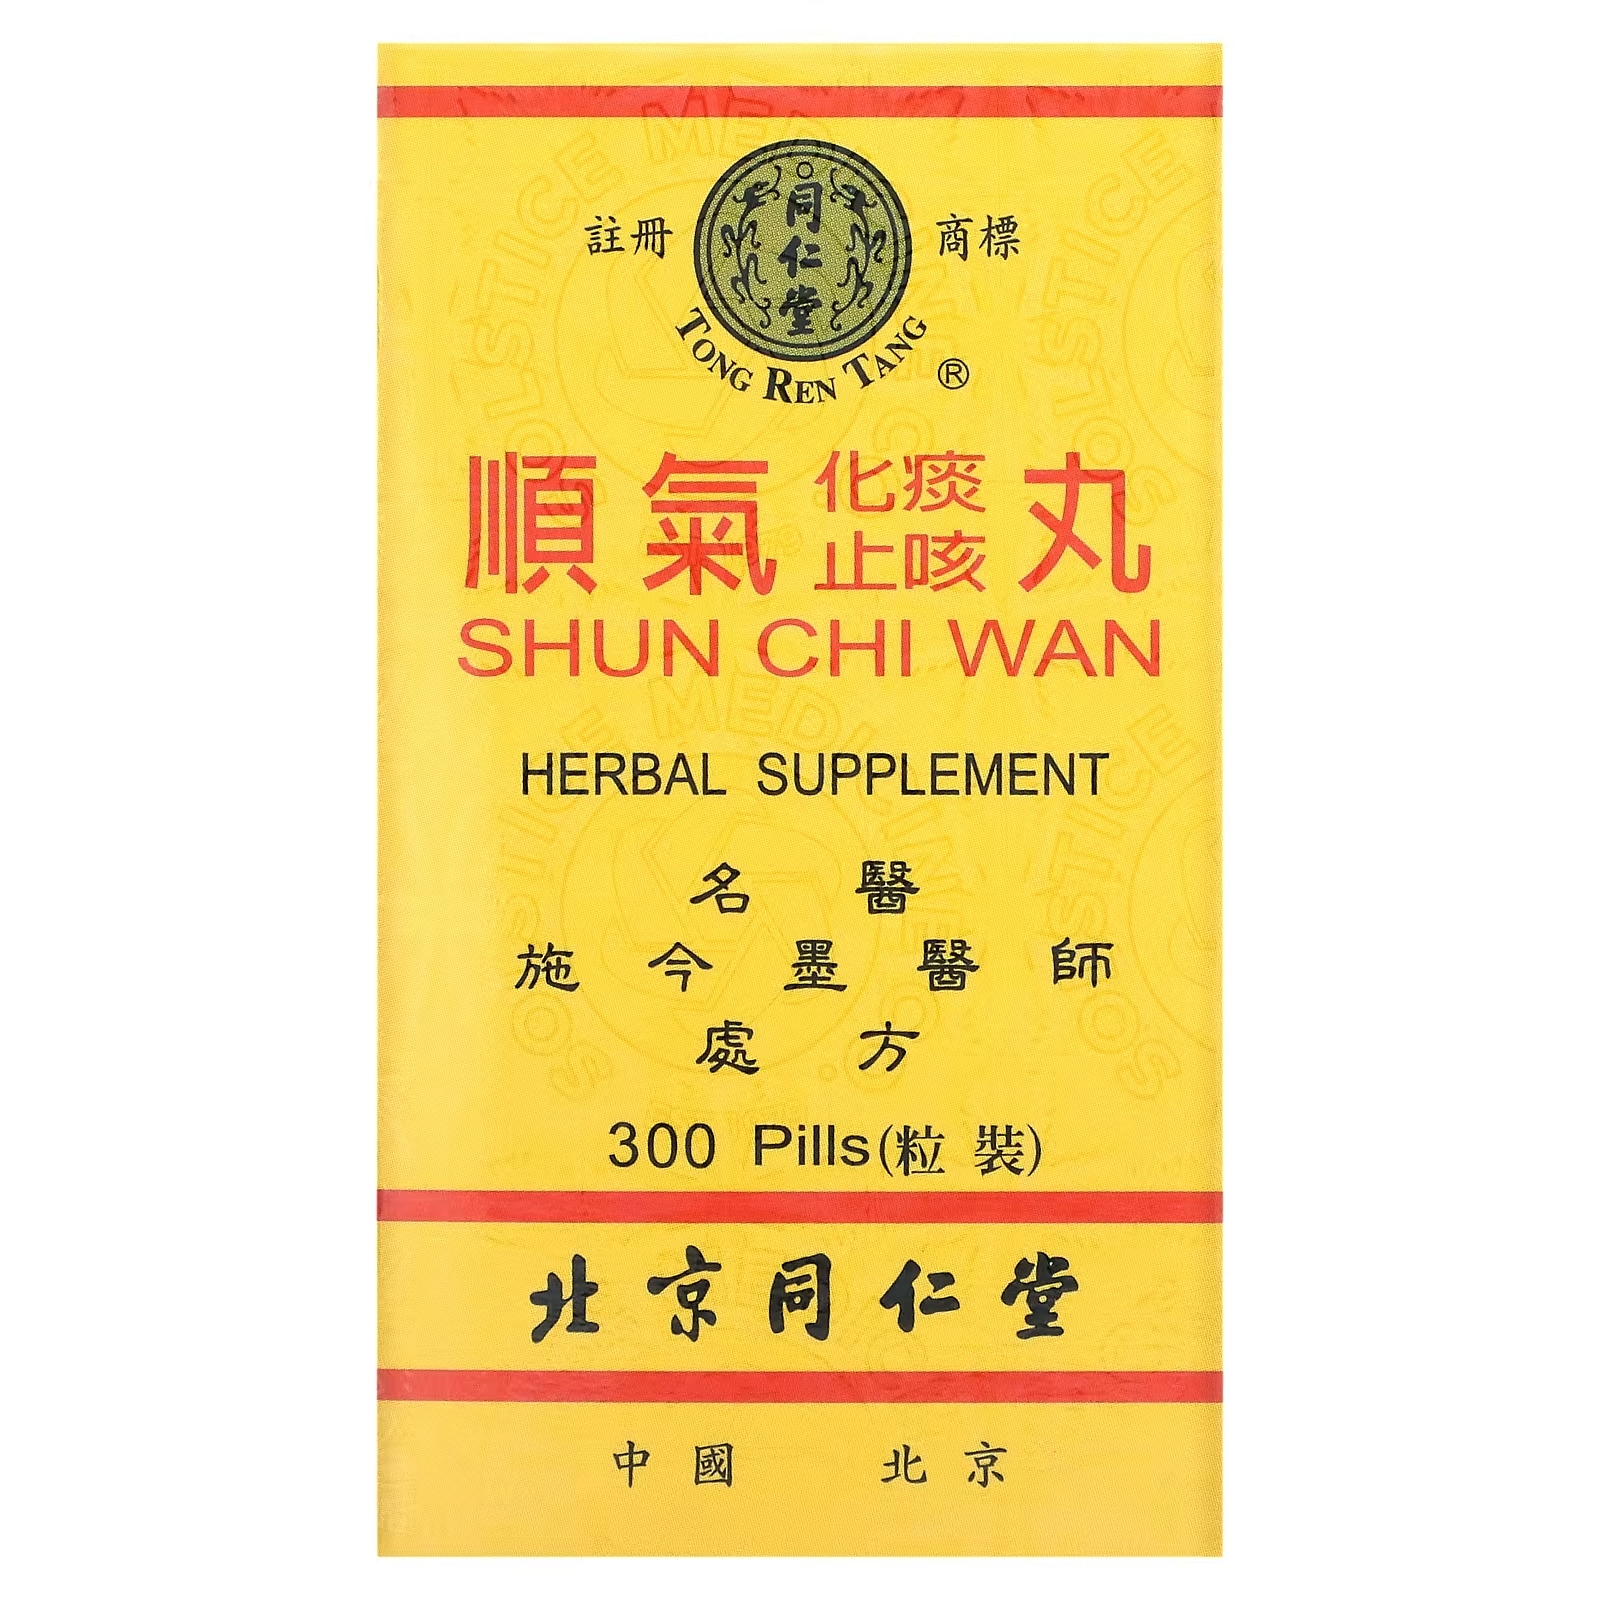 Tong Ren Tang Shun Chi Wan Supports the Health of the Nose Throat Larynx Trachea and Lungs, 300 таблеток tong ren tang shun chi wan поддерживает здоровье носа горла гортани трахеи и легких 300 таблеток